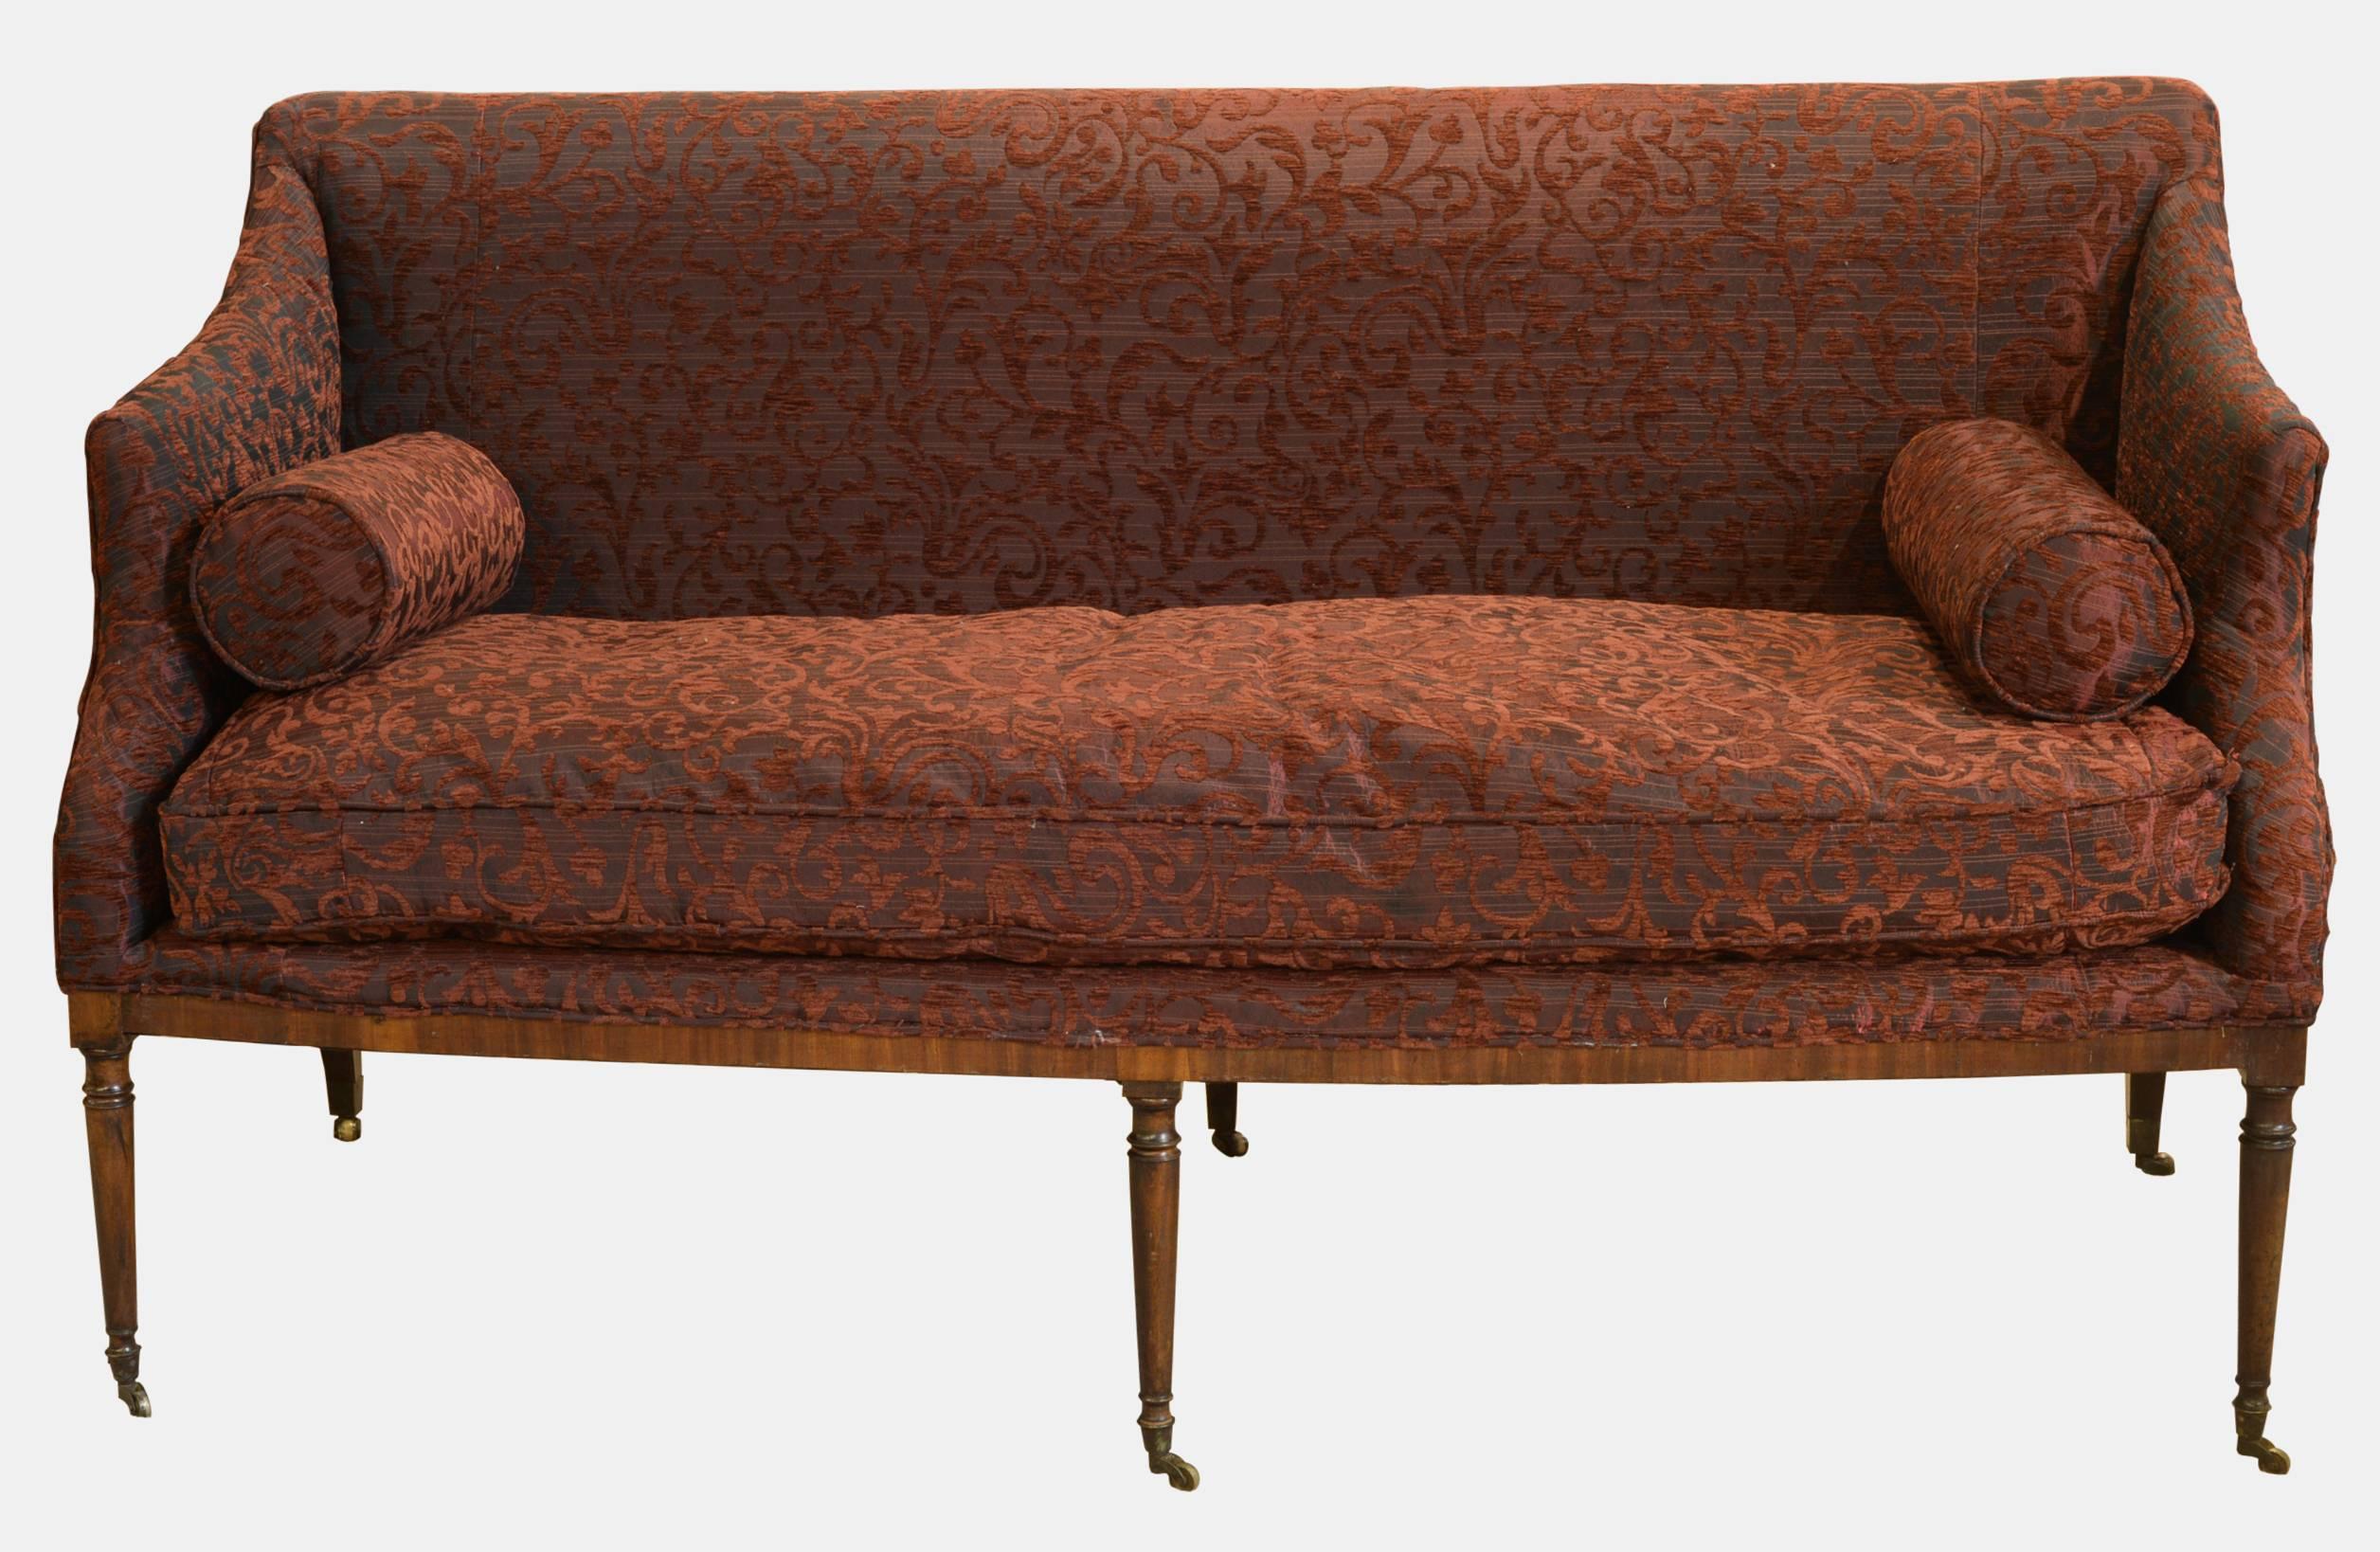 A George III mahogany framed sofa on fine turned legs, with framed castors,

circa 1790.